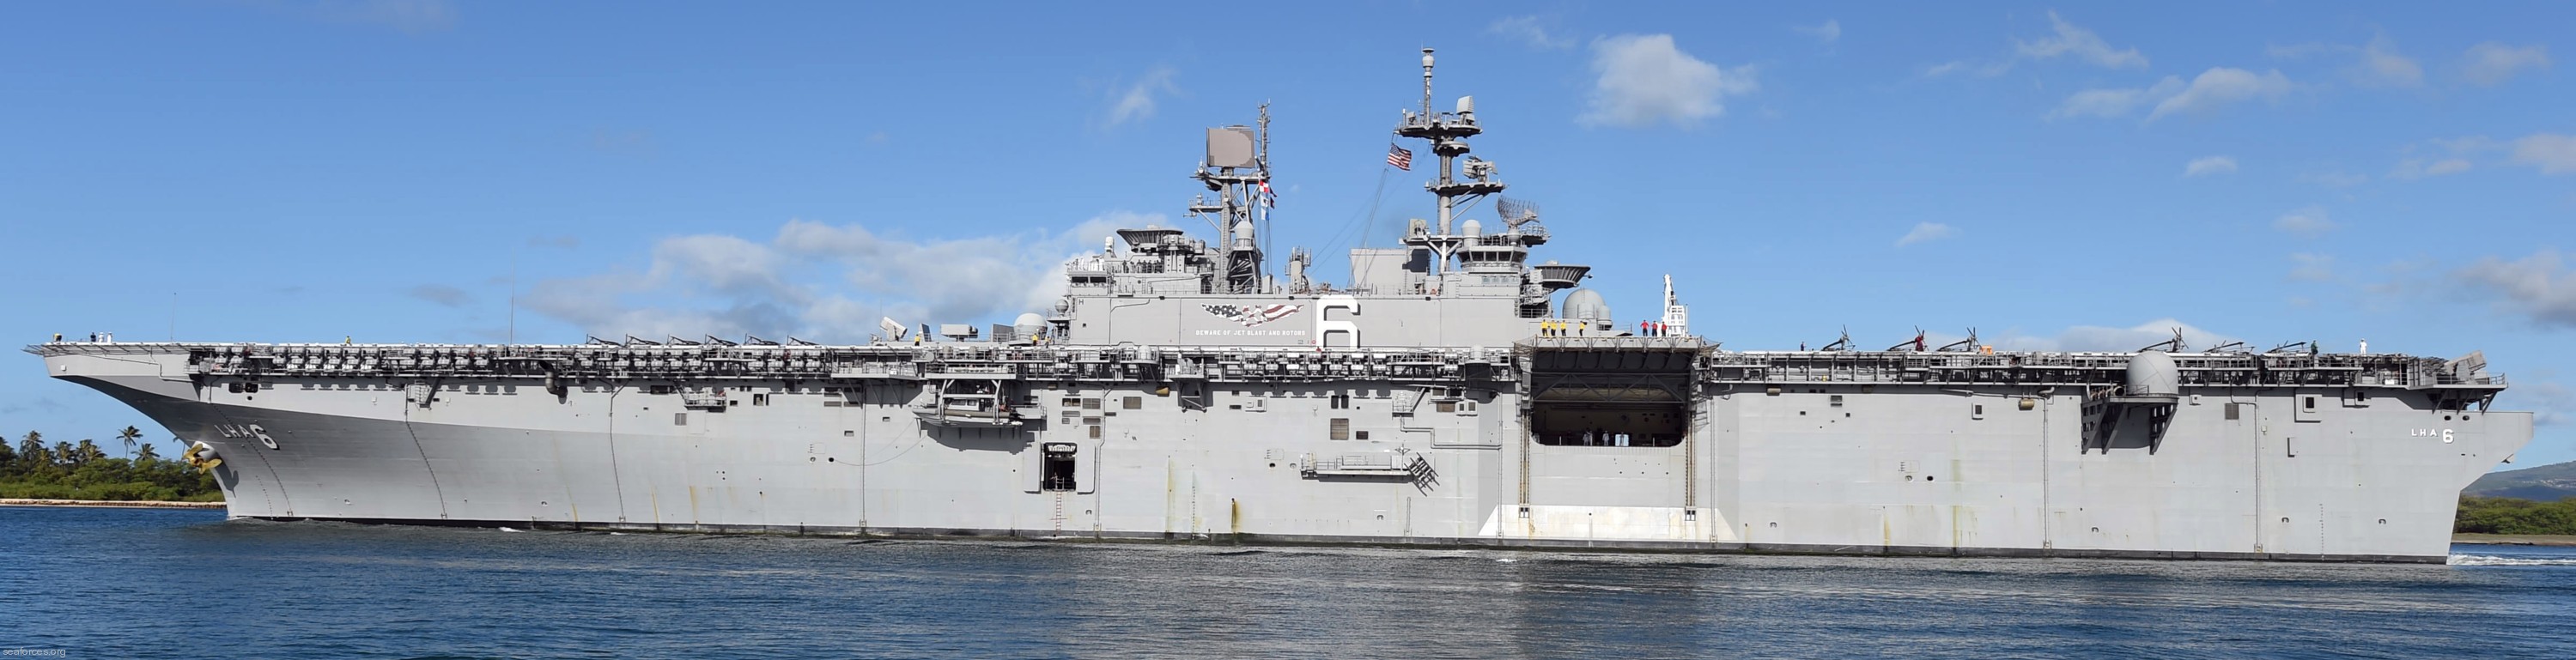 lha-6 uss america amphibious assault ship us navy 112